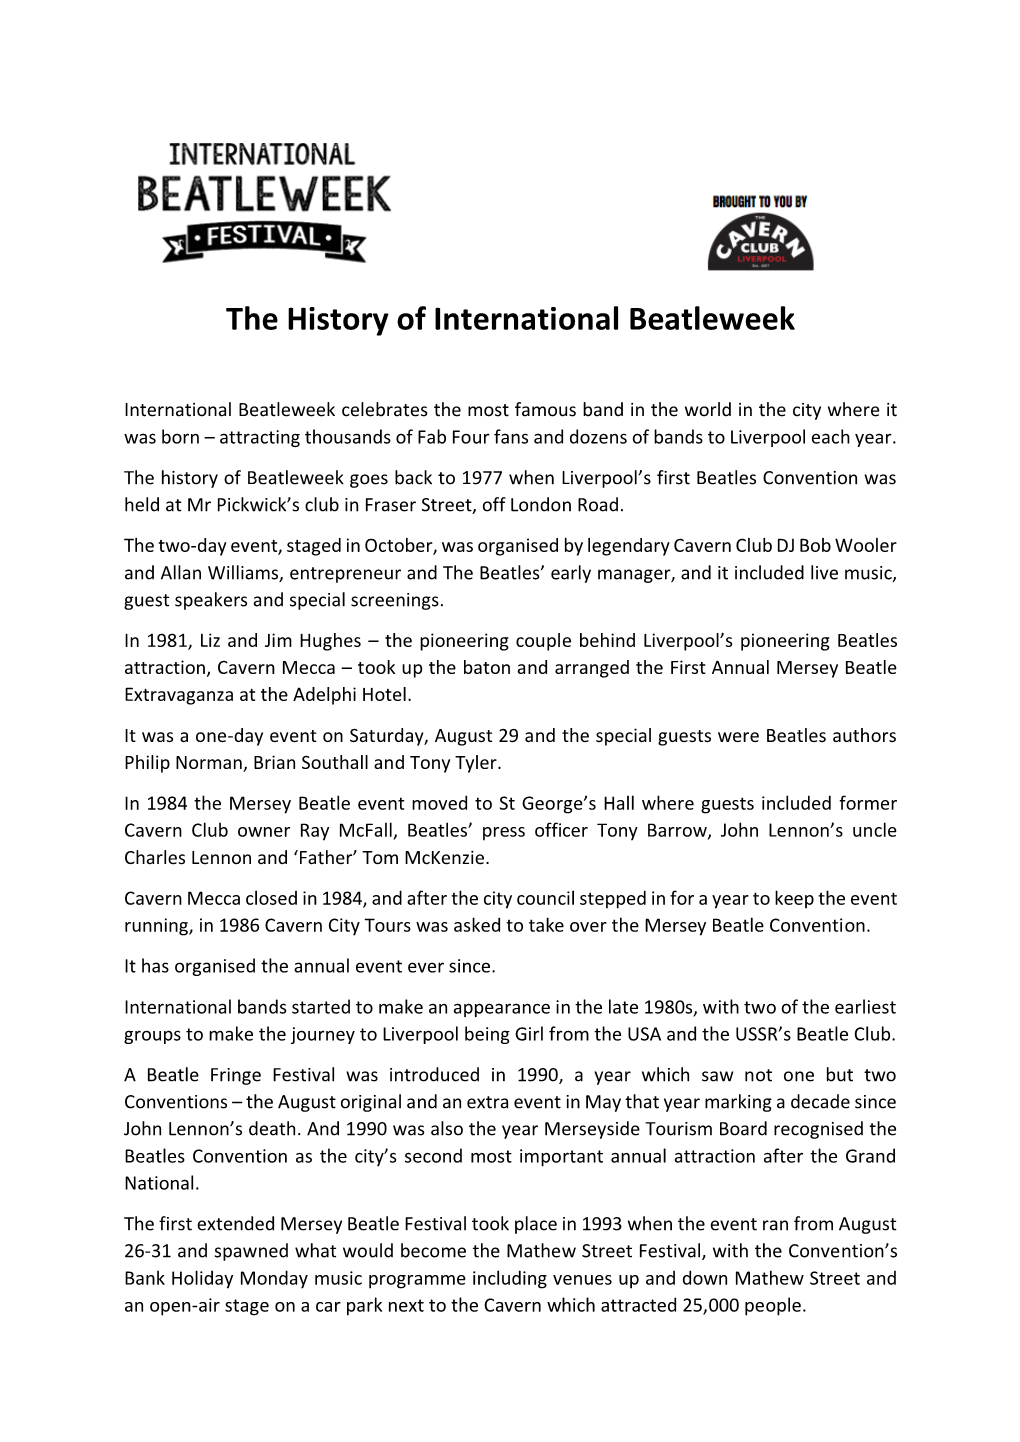 A History of International Beatleweek (PDF)